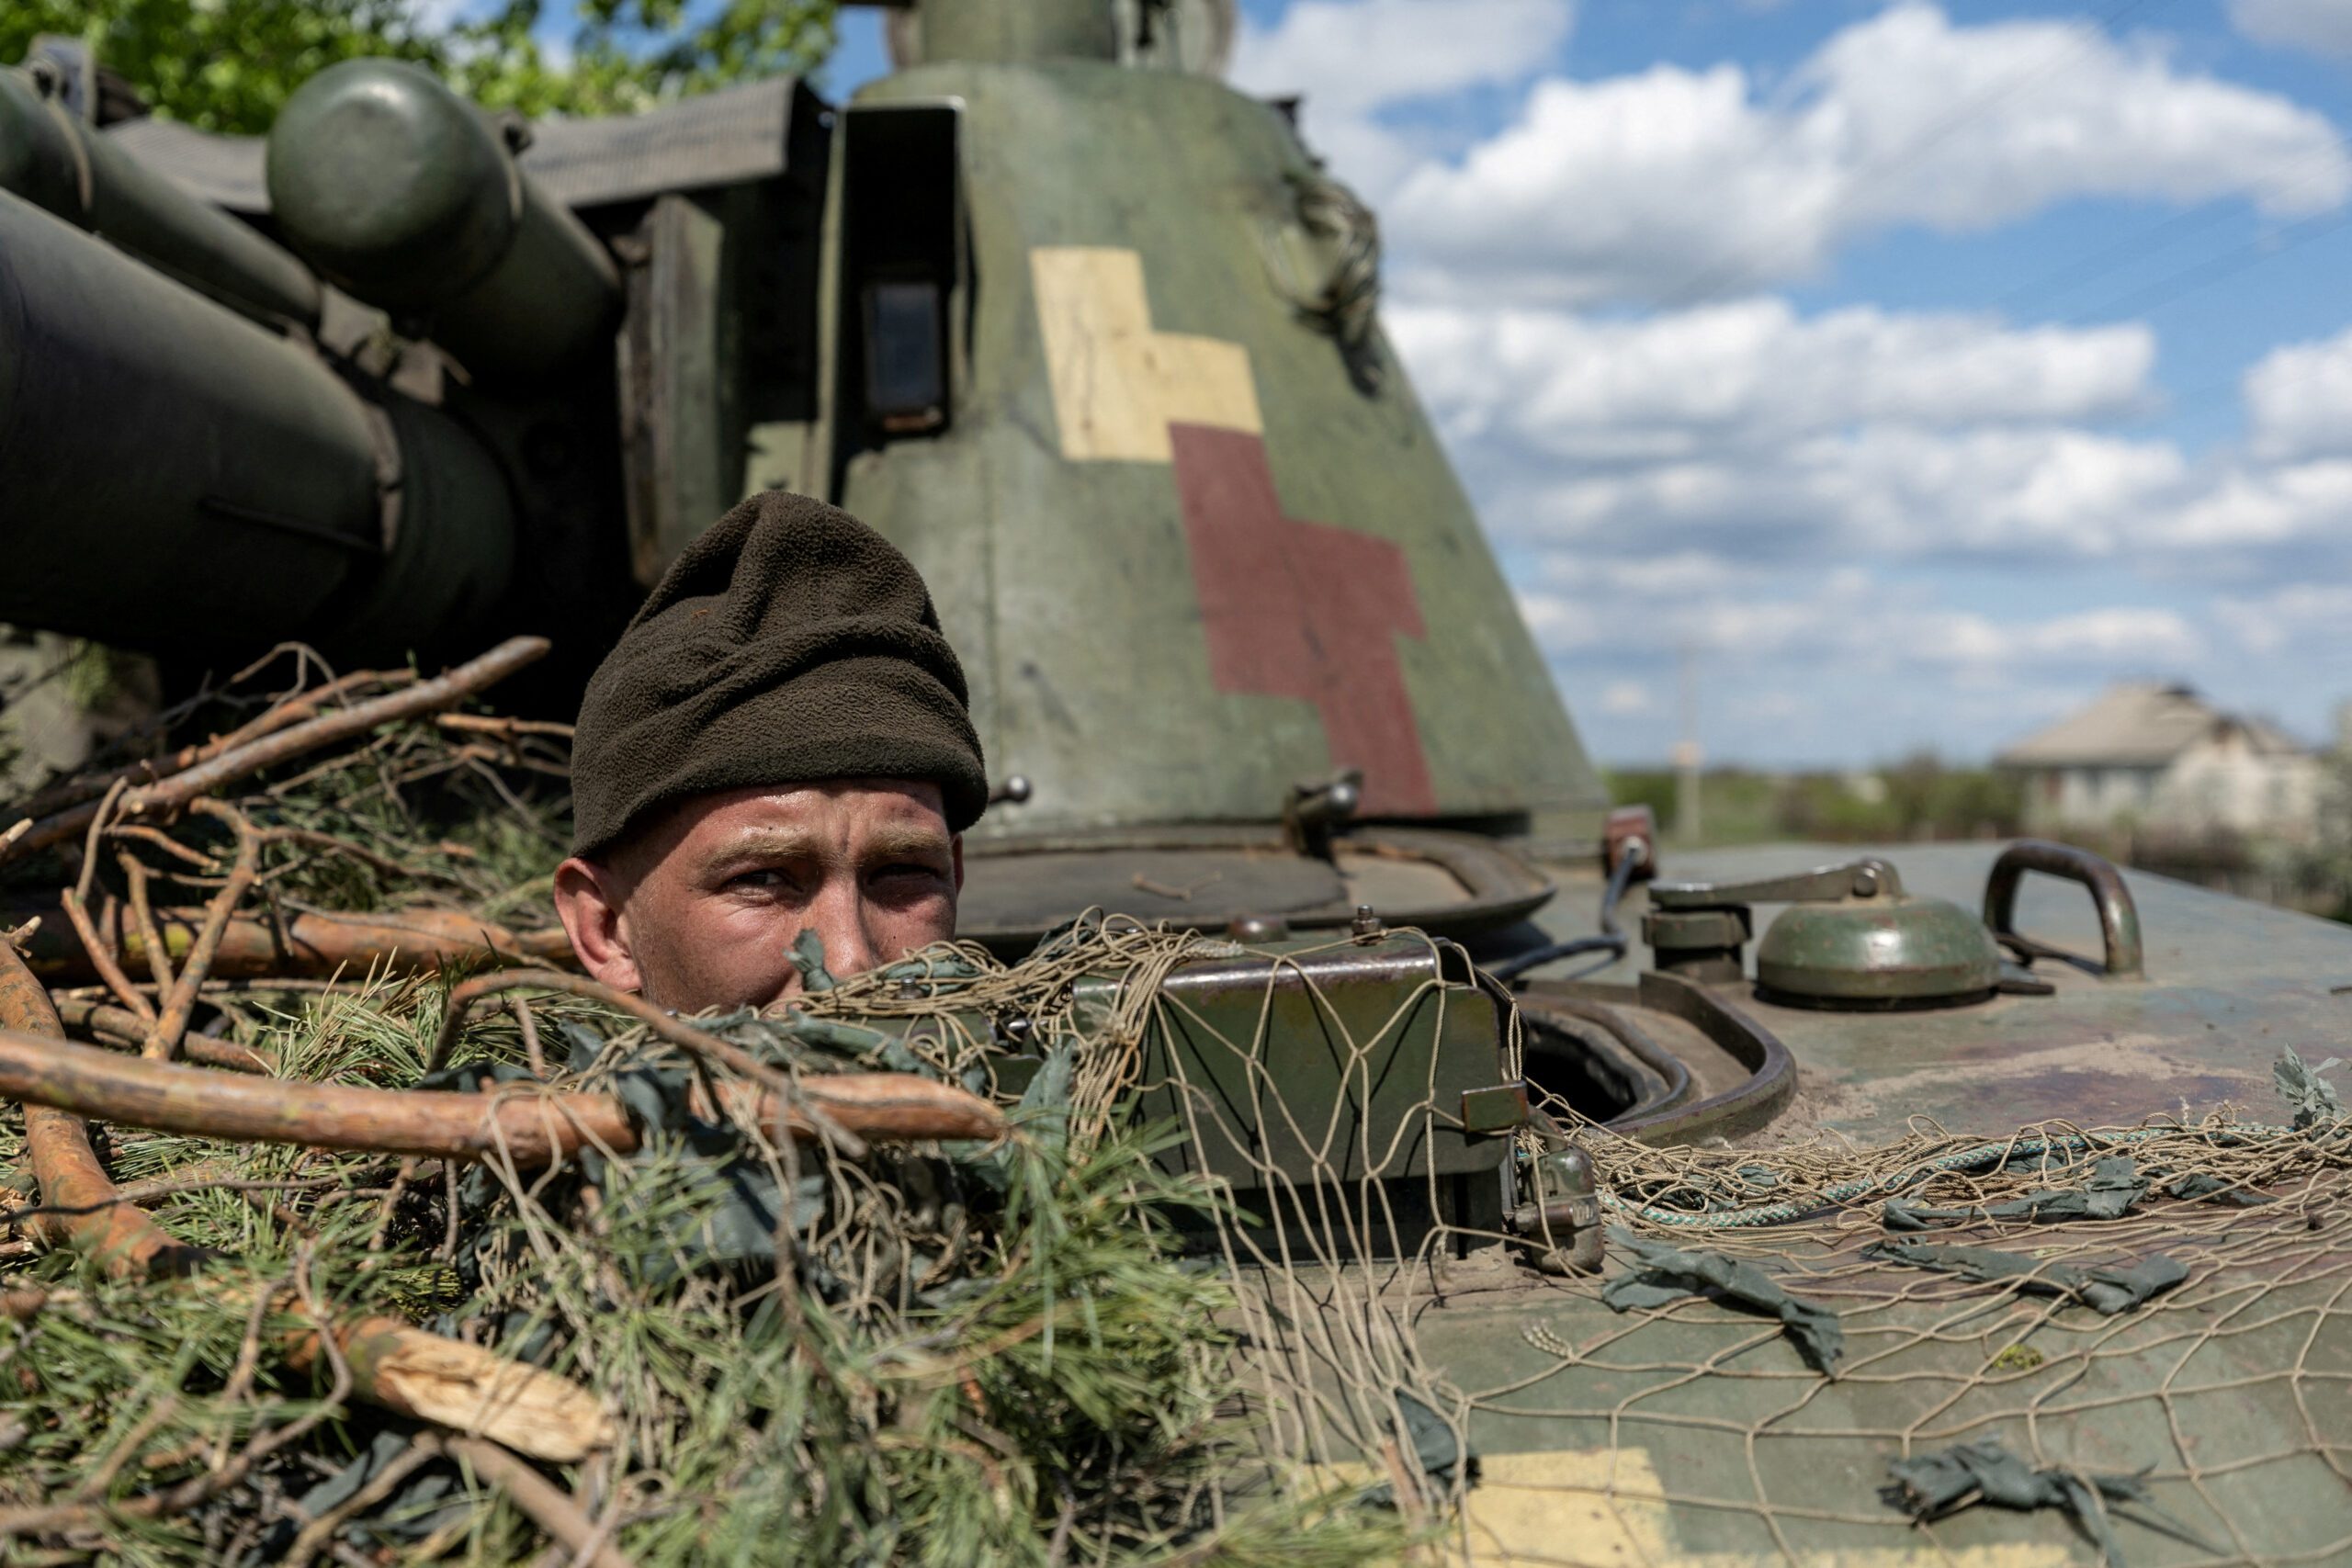 Russia abandons Ukrainian bastion, Putin ally suggests nuclear response